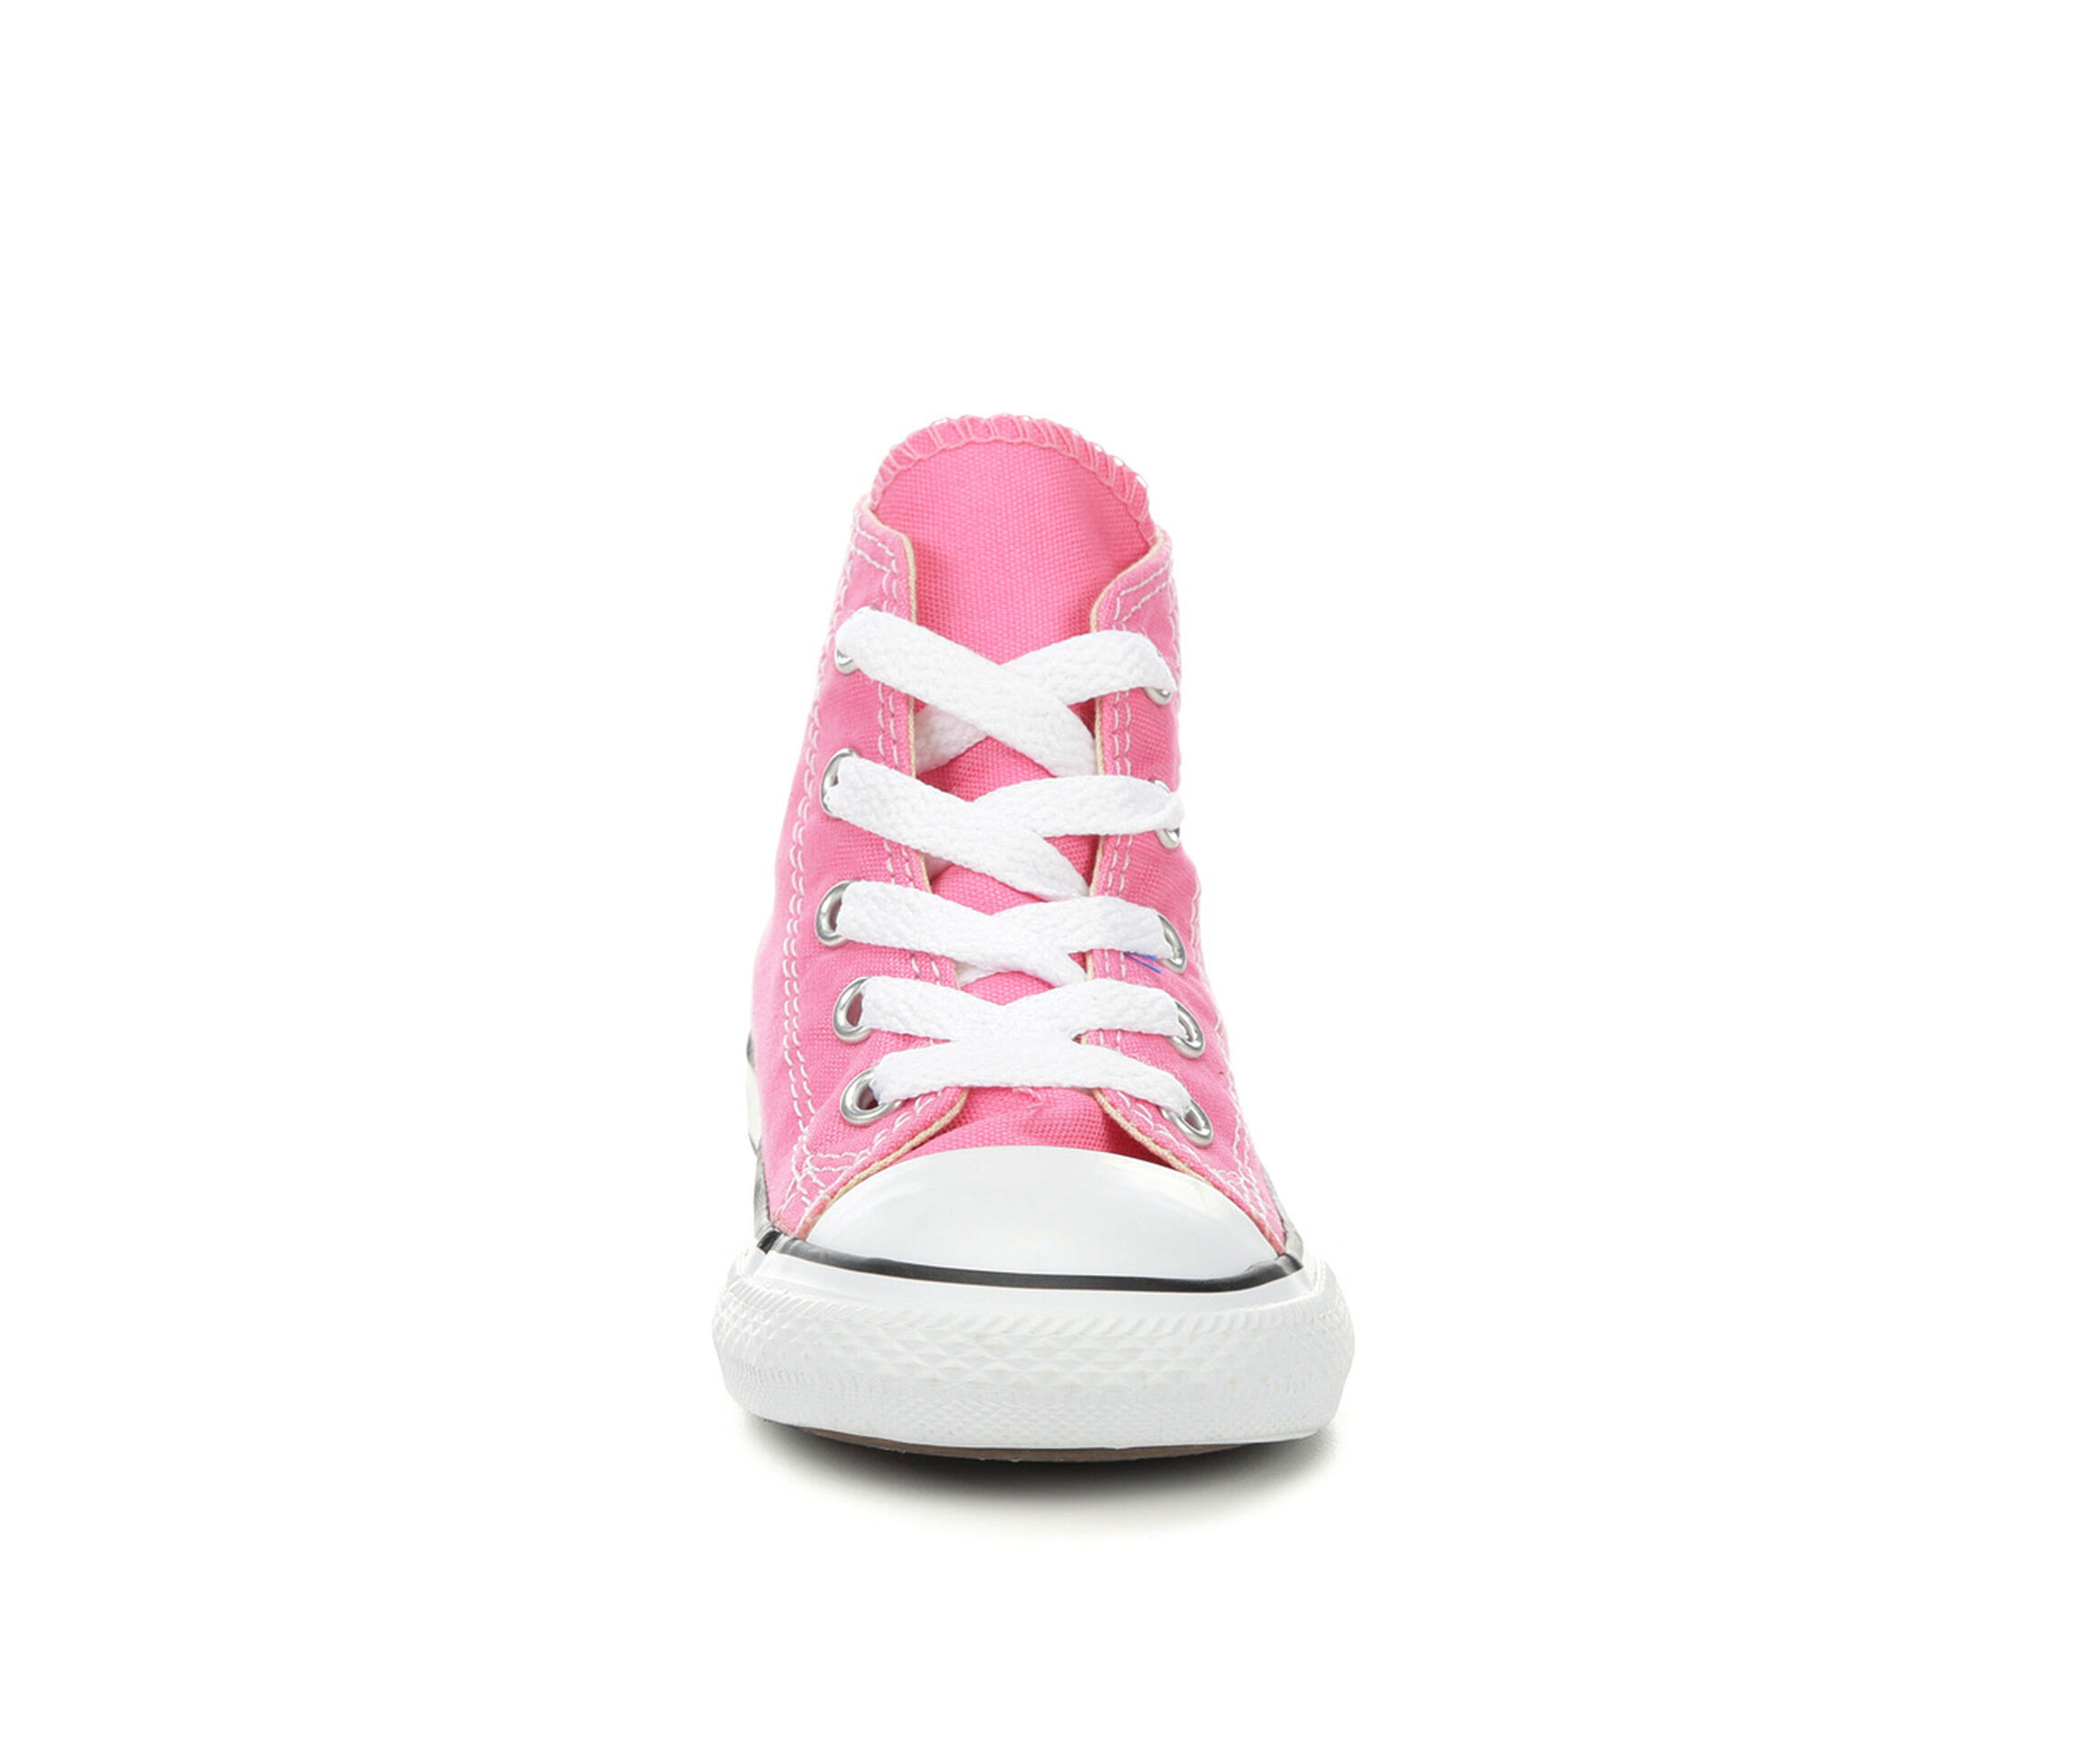 pink converse toddler girl